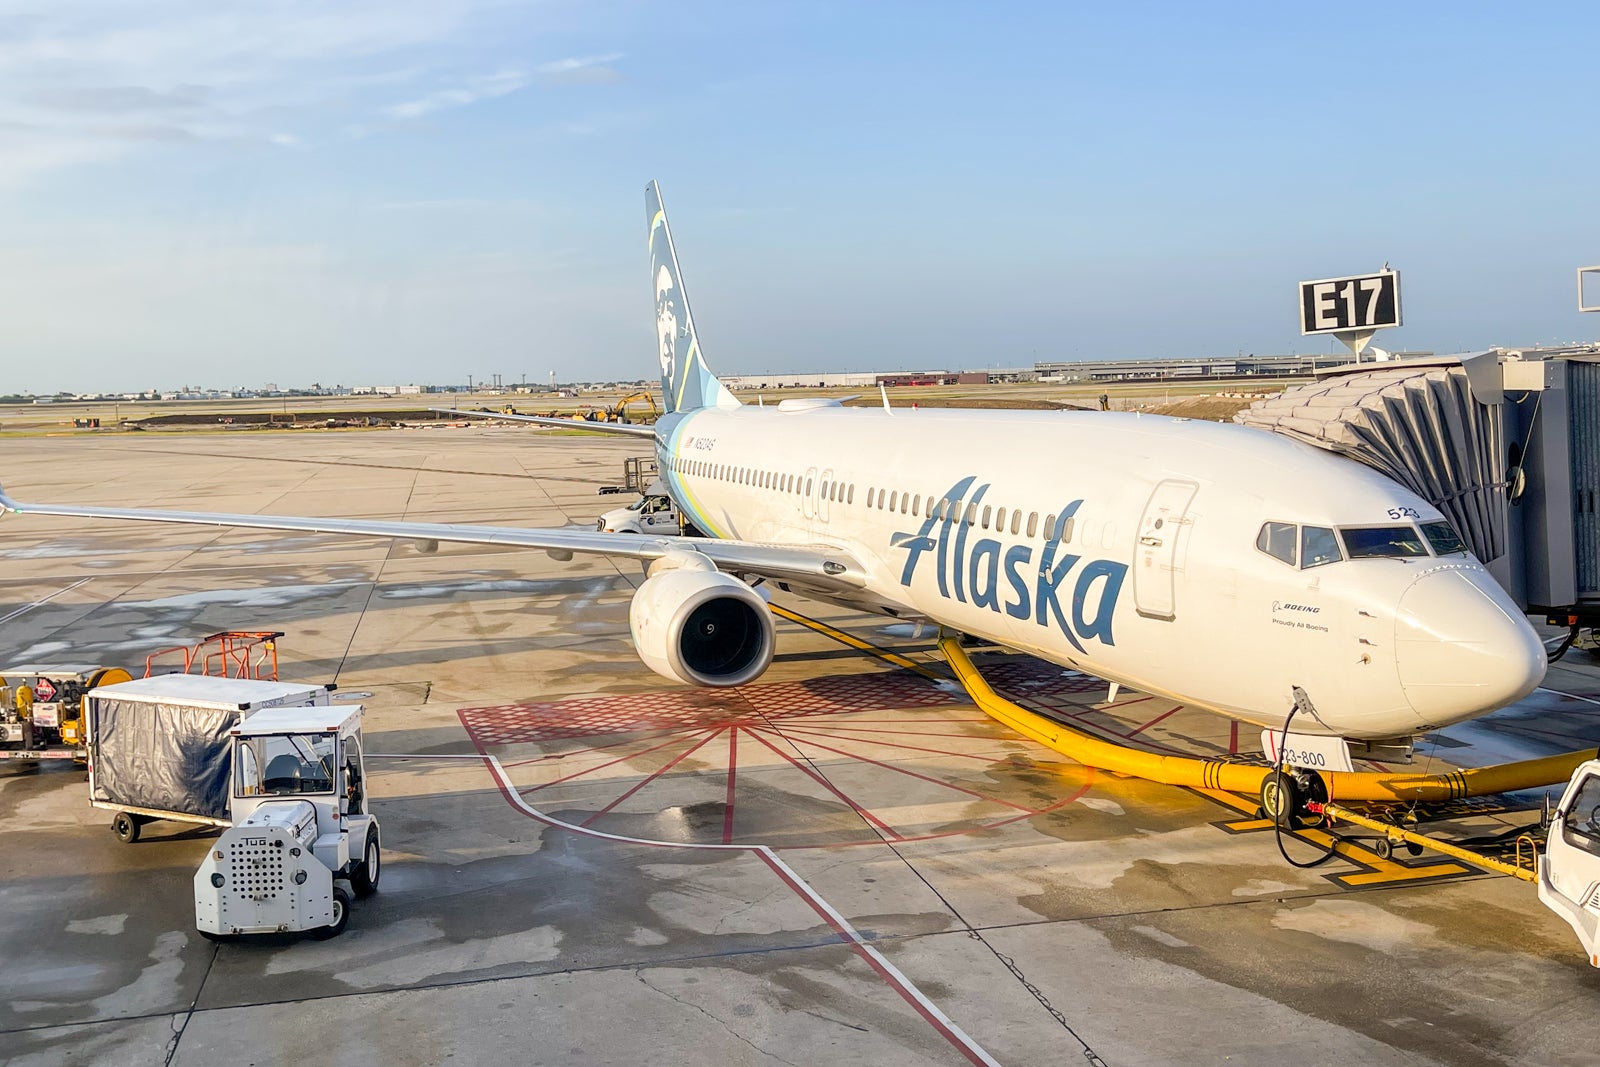 Alaska Airways affords Apple Pay on board for choose flights